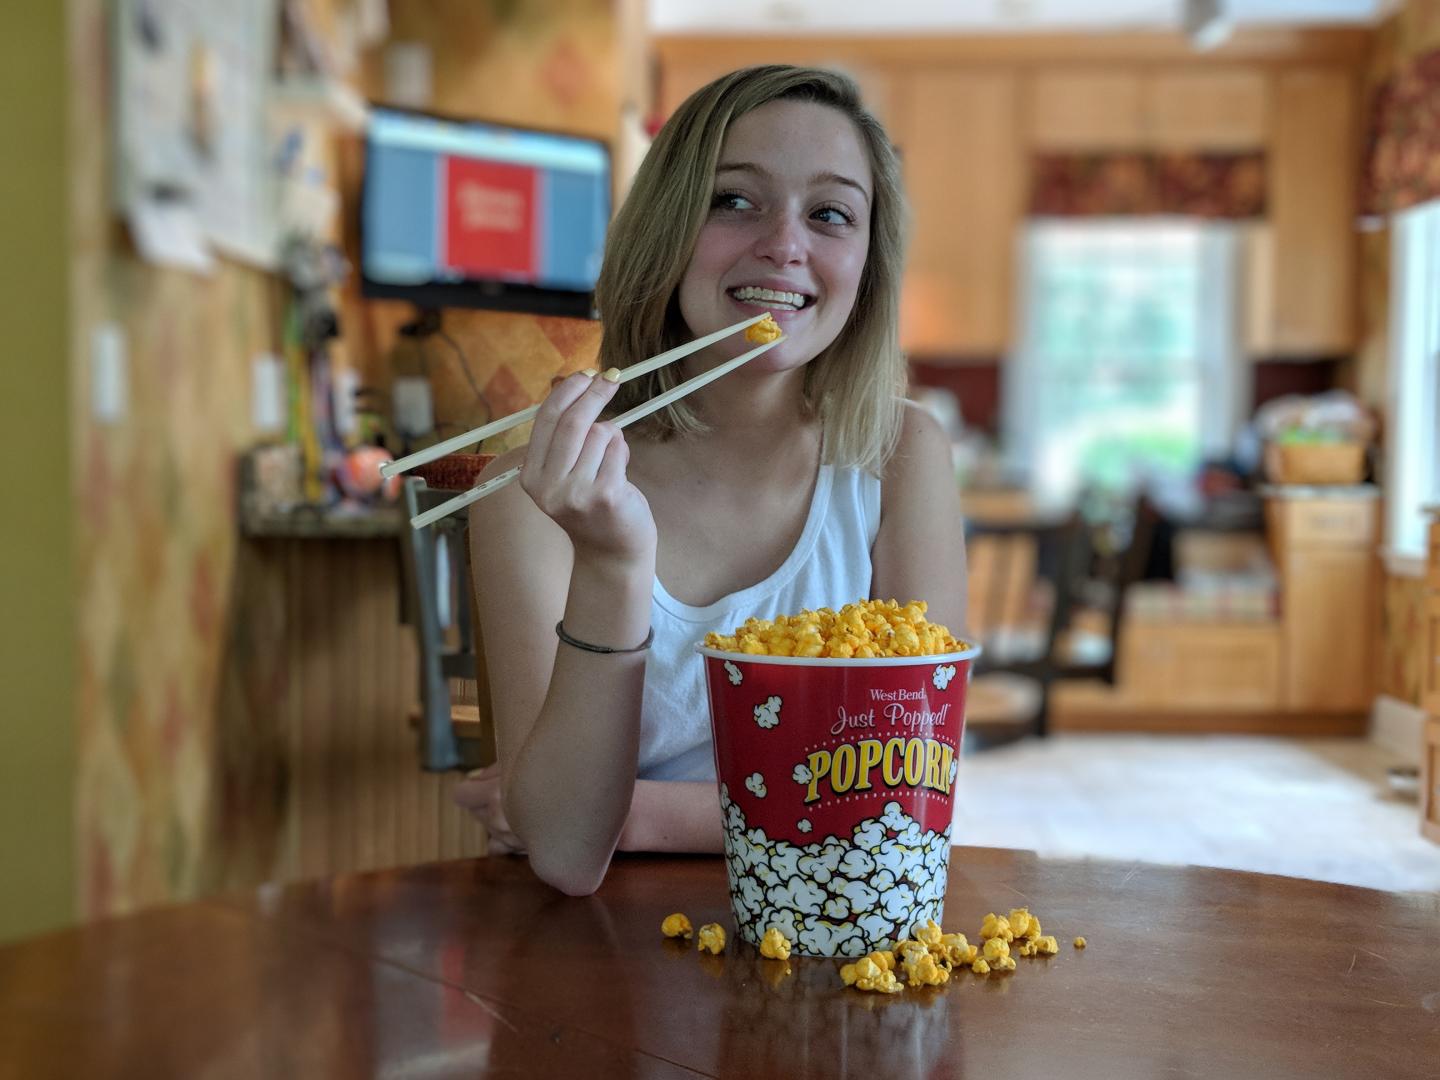 Eating popcorn with chopsticks